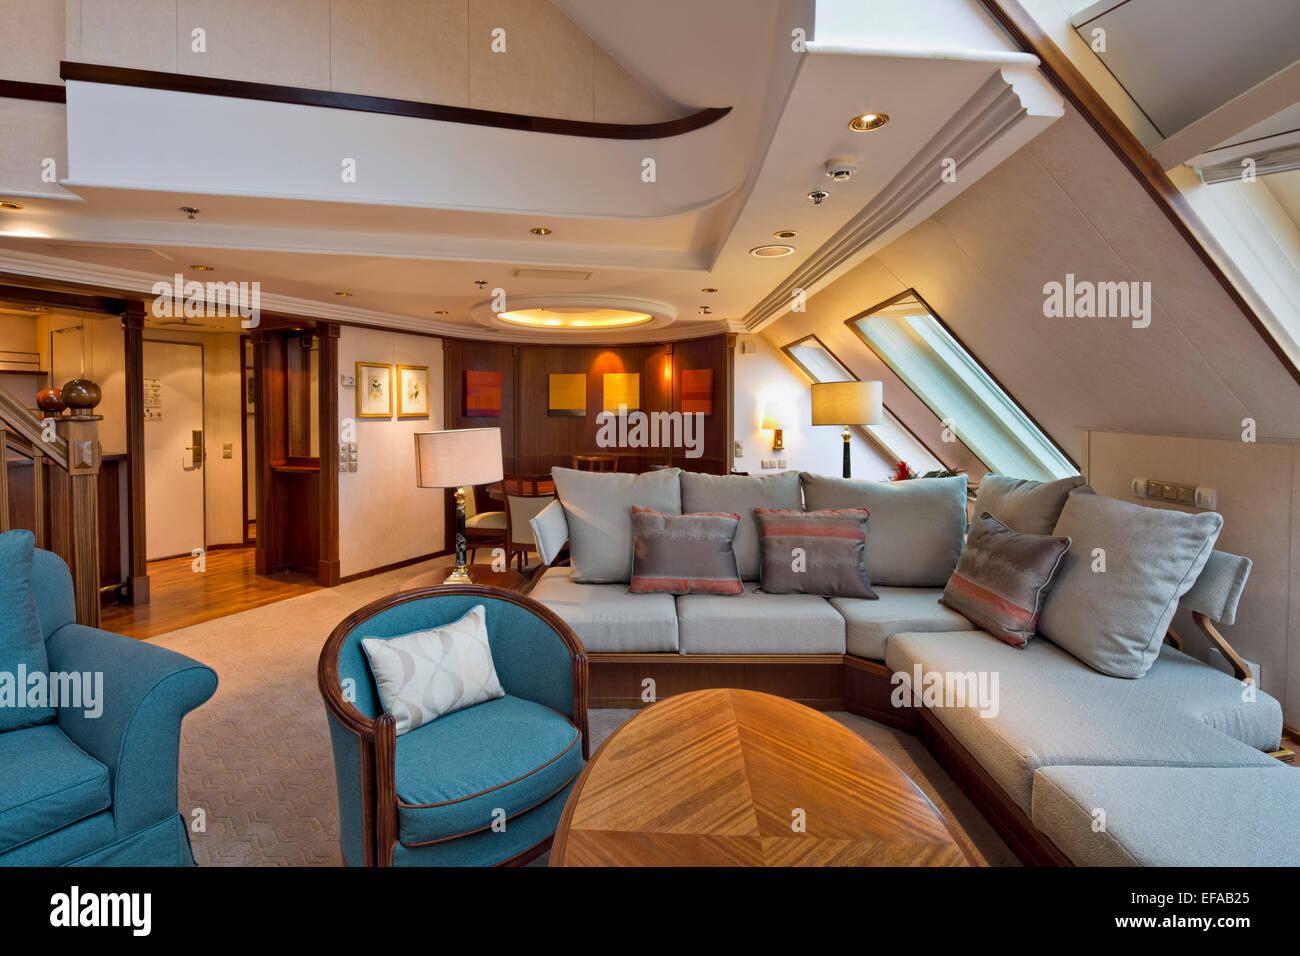 P&O Cruise Ship Interiors, Southampton, United Kingdom. Architect: SMC Design, 2014. Penthouse suite. Stock Photo